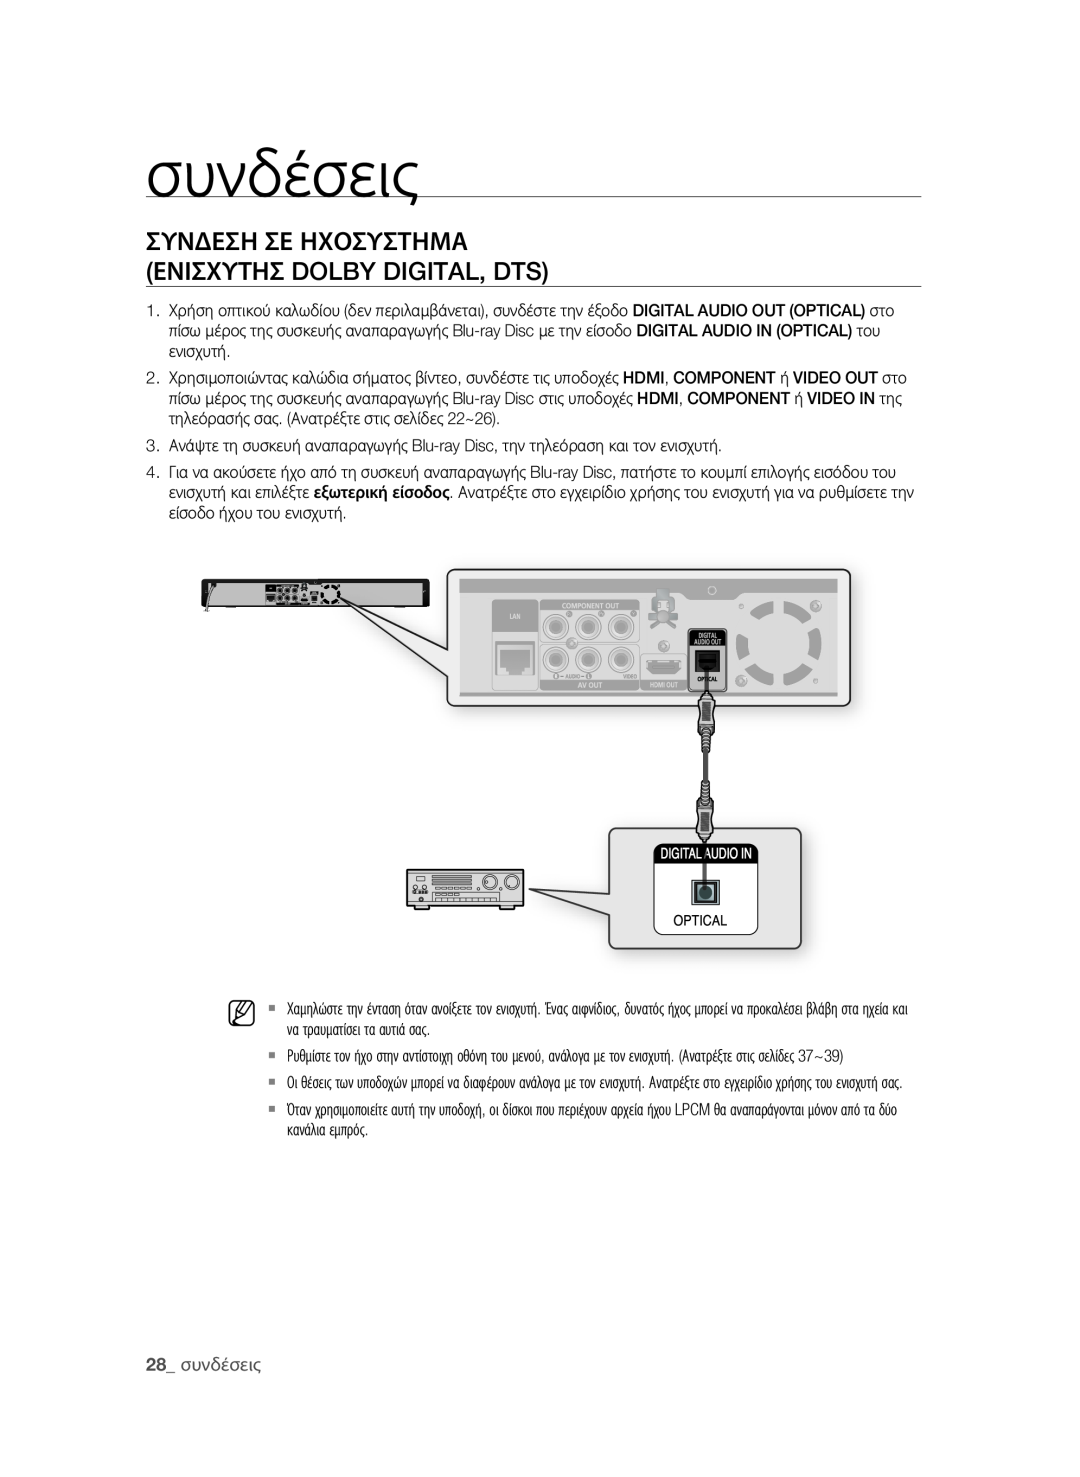 Samsung BD-P1580/EDC manual Συνδεση Σε Ηχοσυστημα Ενισχυτησ Dolby Digital, Dts, 28 συνδέσεις 